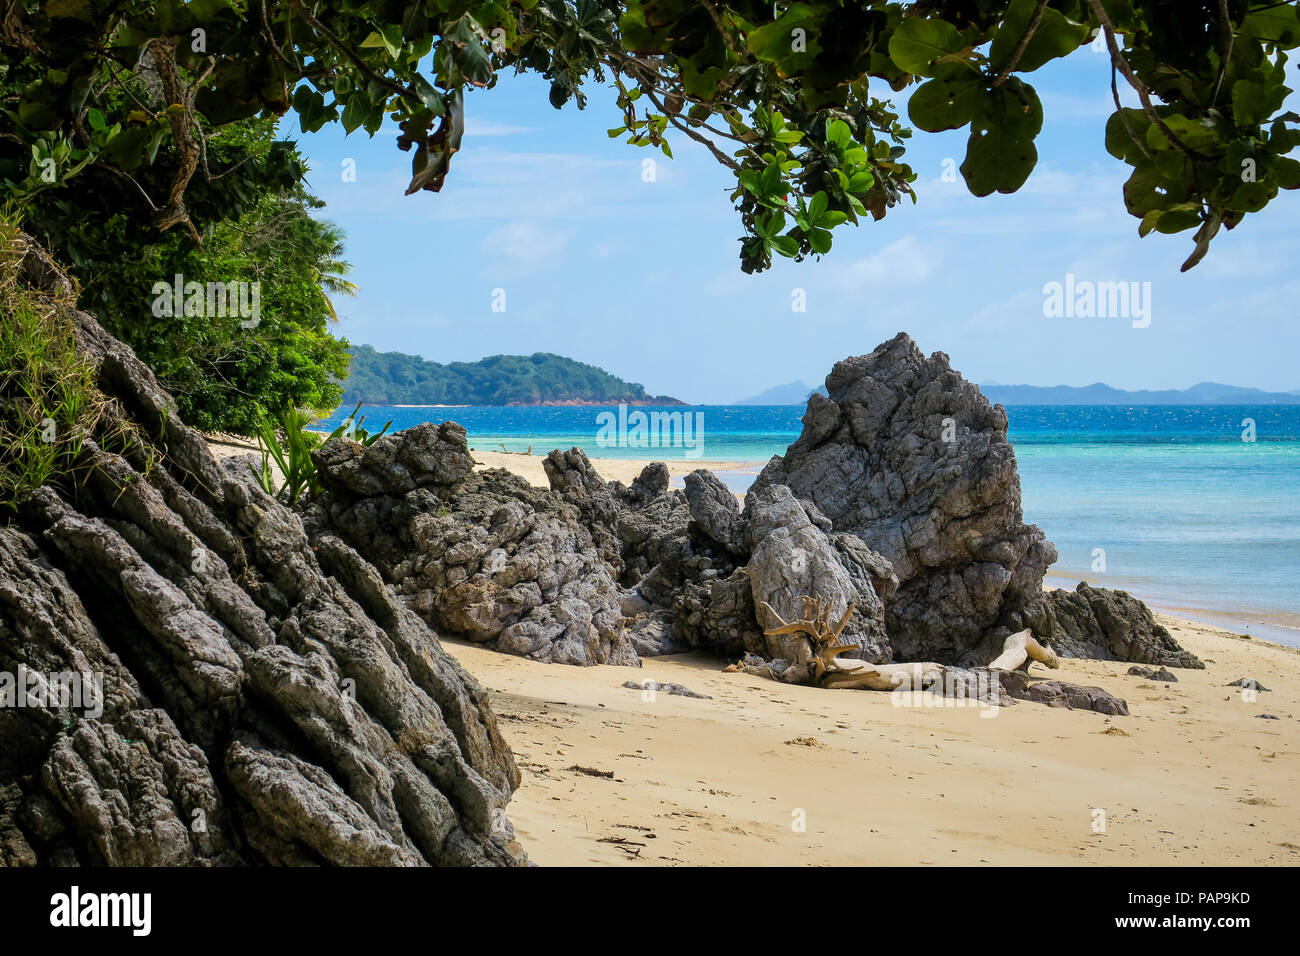 Craggy island beach with turquoise coastline - Linapacan, Palawan - Philippines Stock Photo